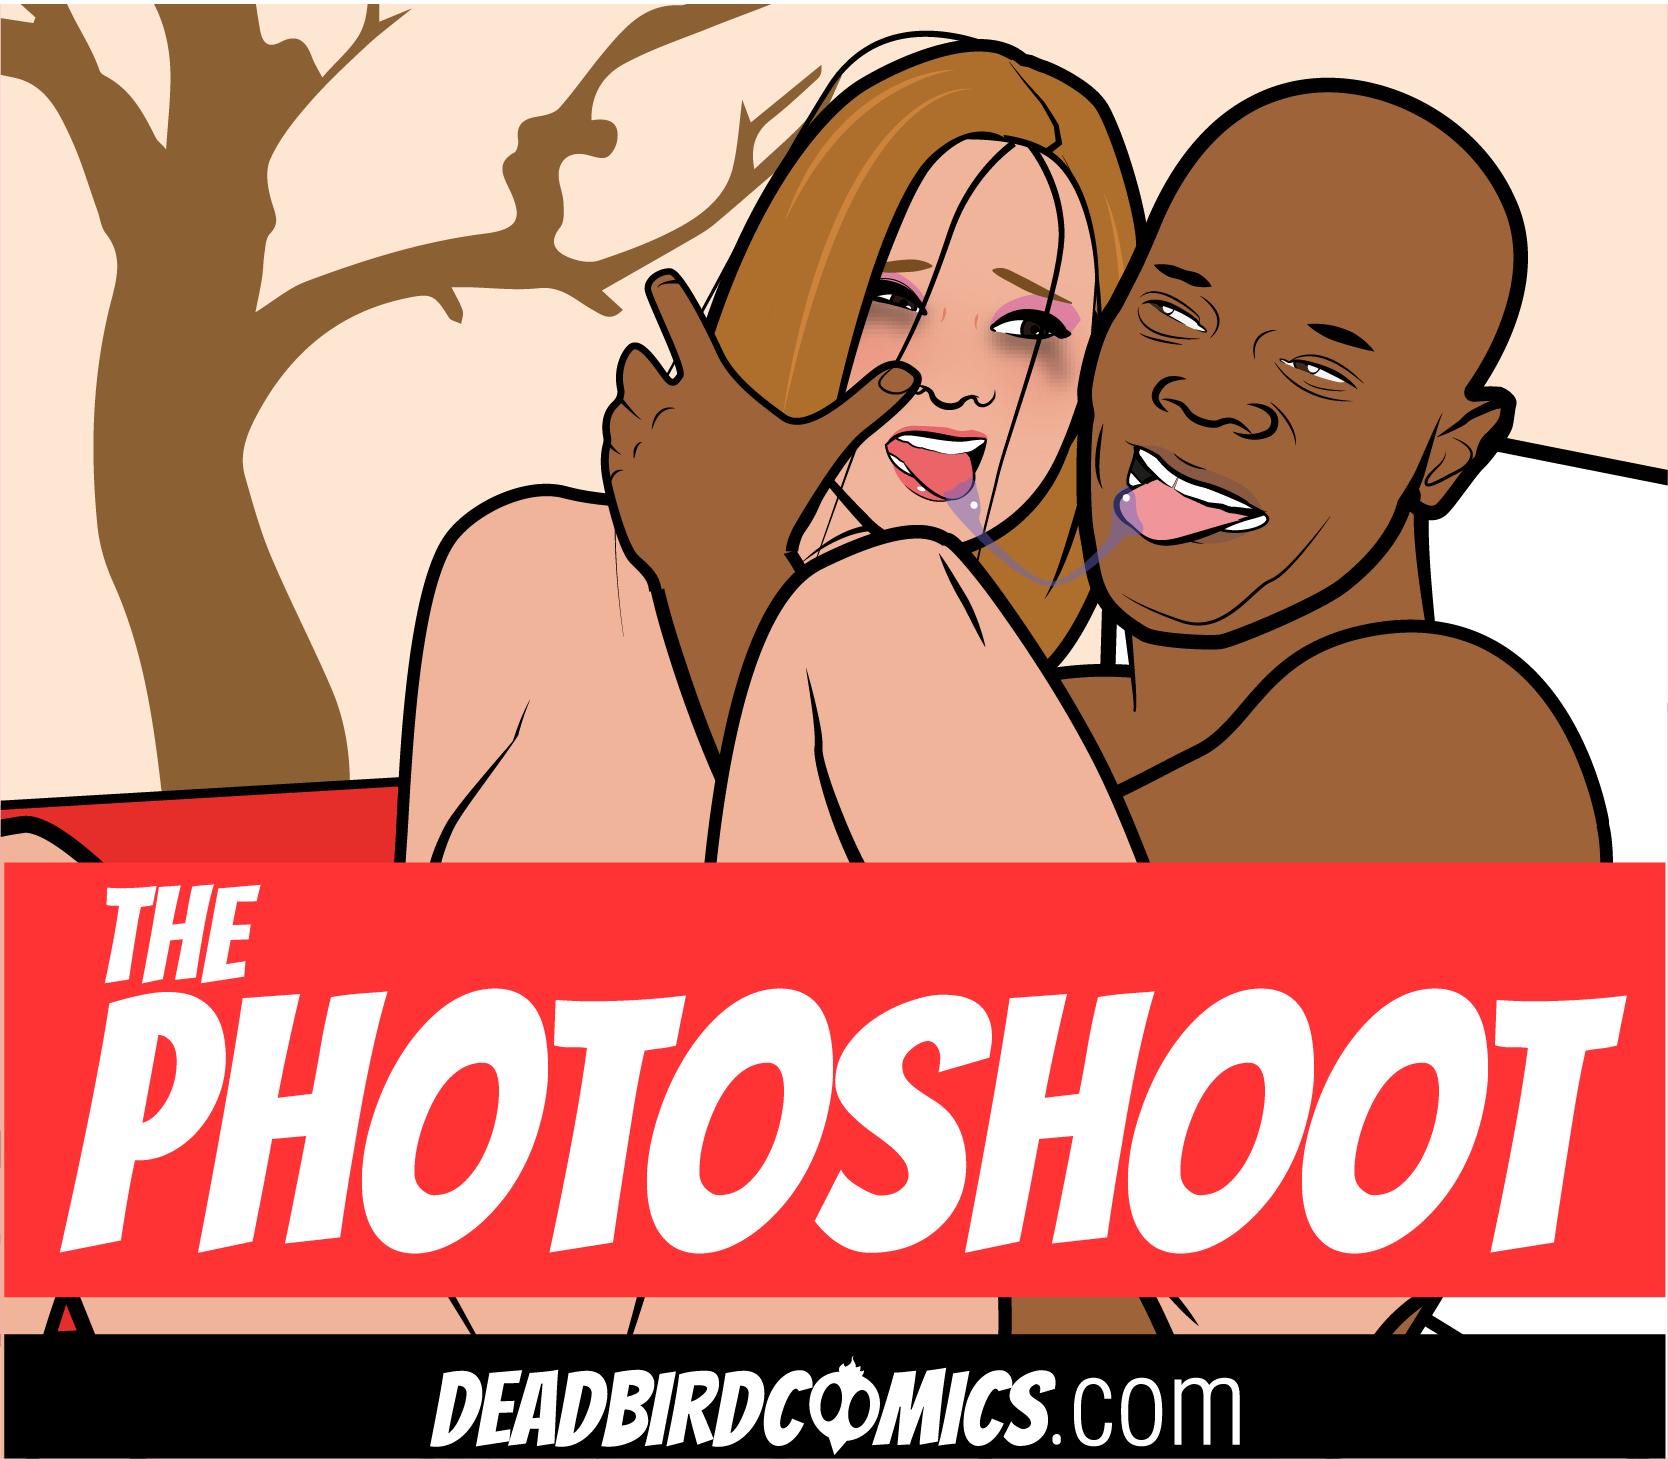 Deadbirdcomics - The Photoshoot